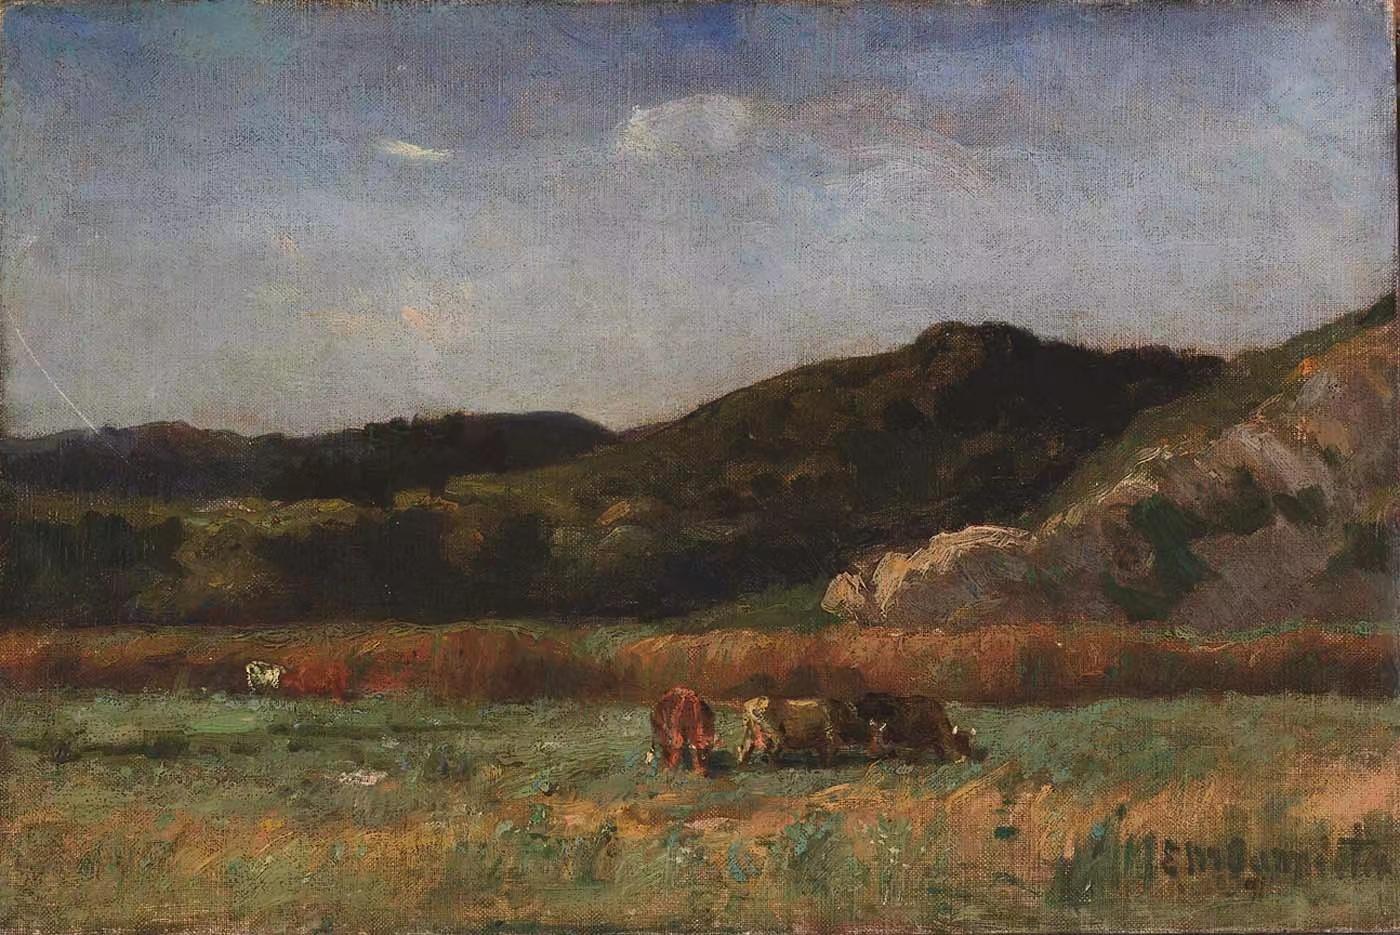 Untitled,Edward Mitchell Bannister,1828-1901